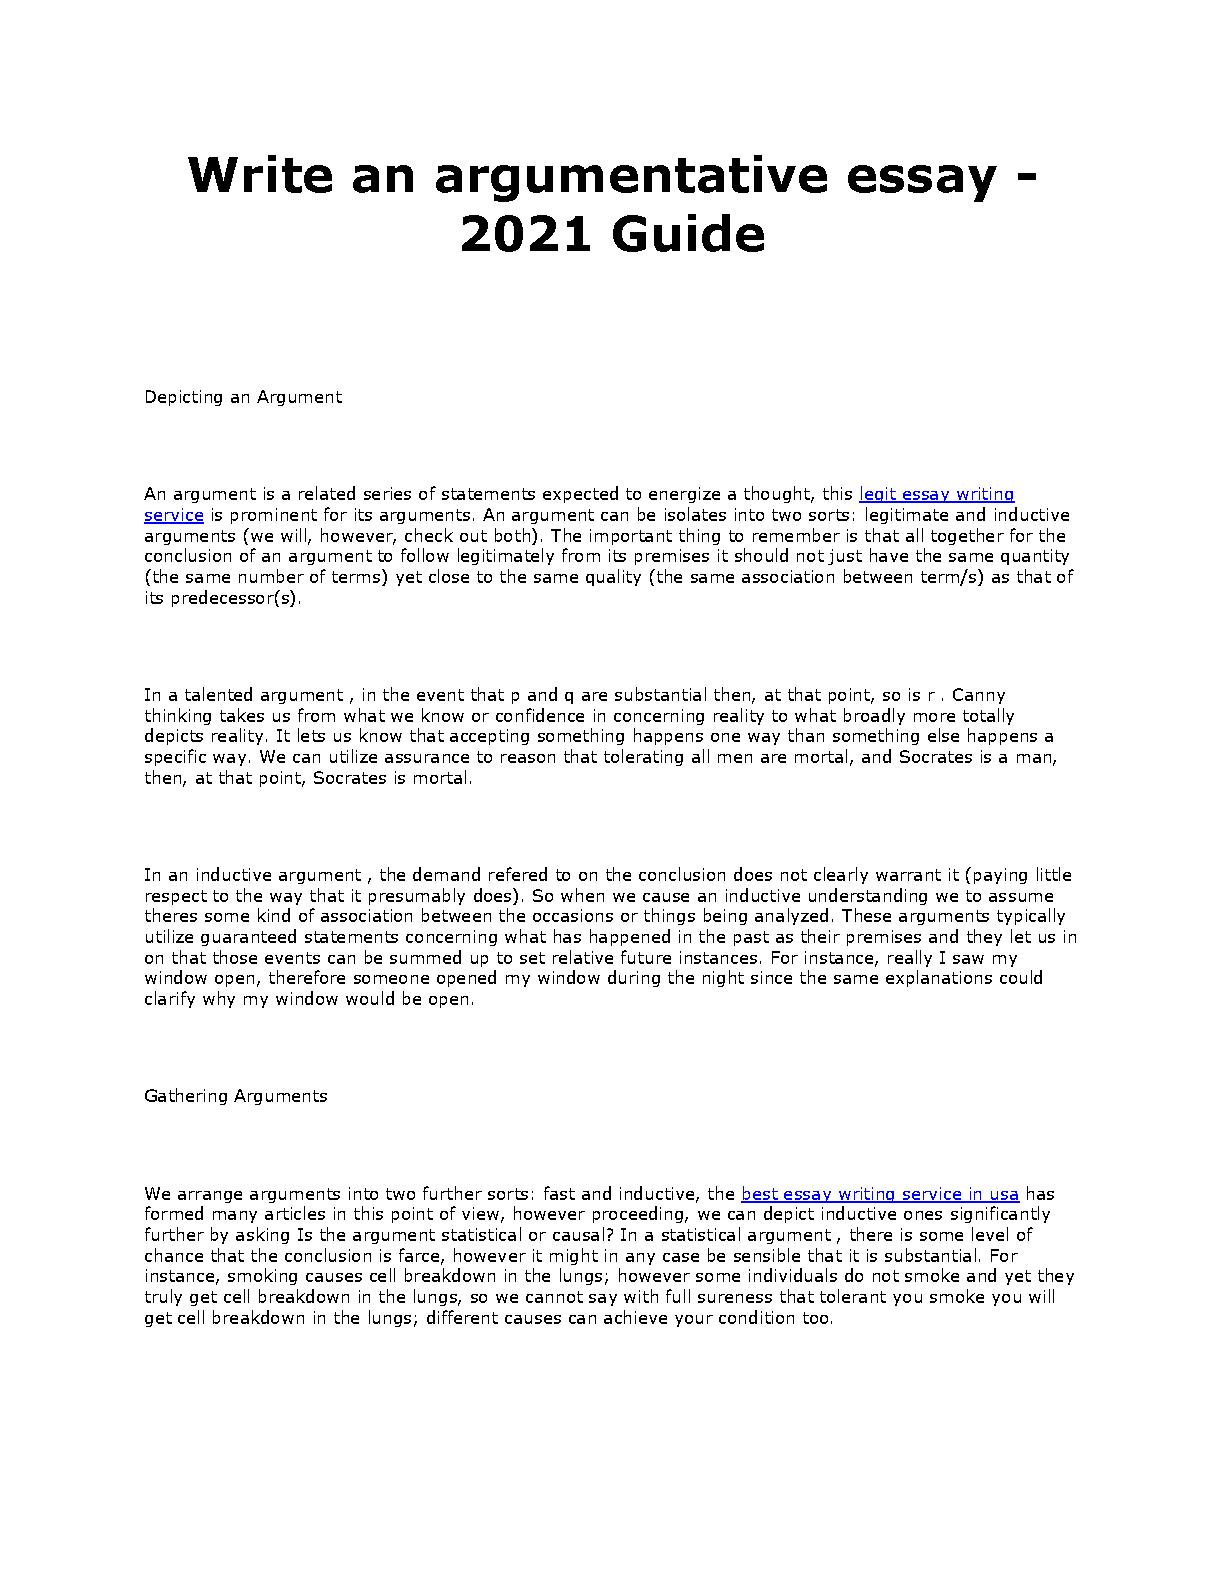 writing essay 2021